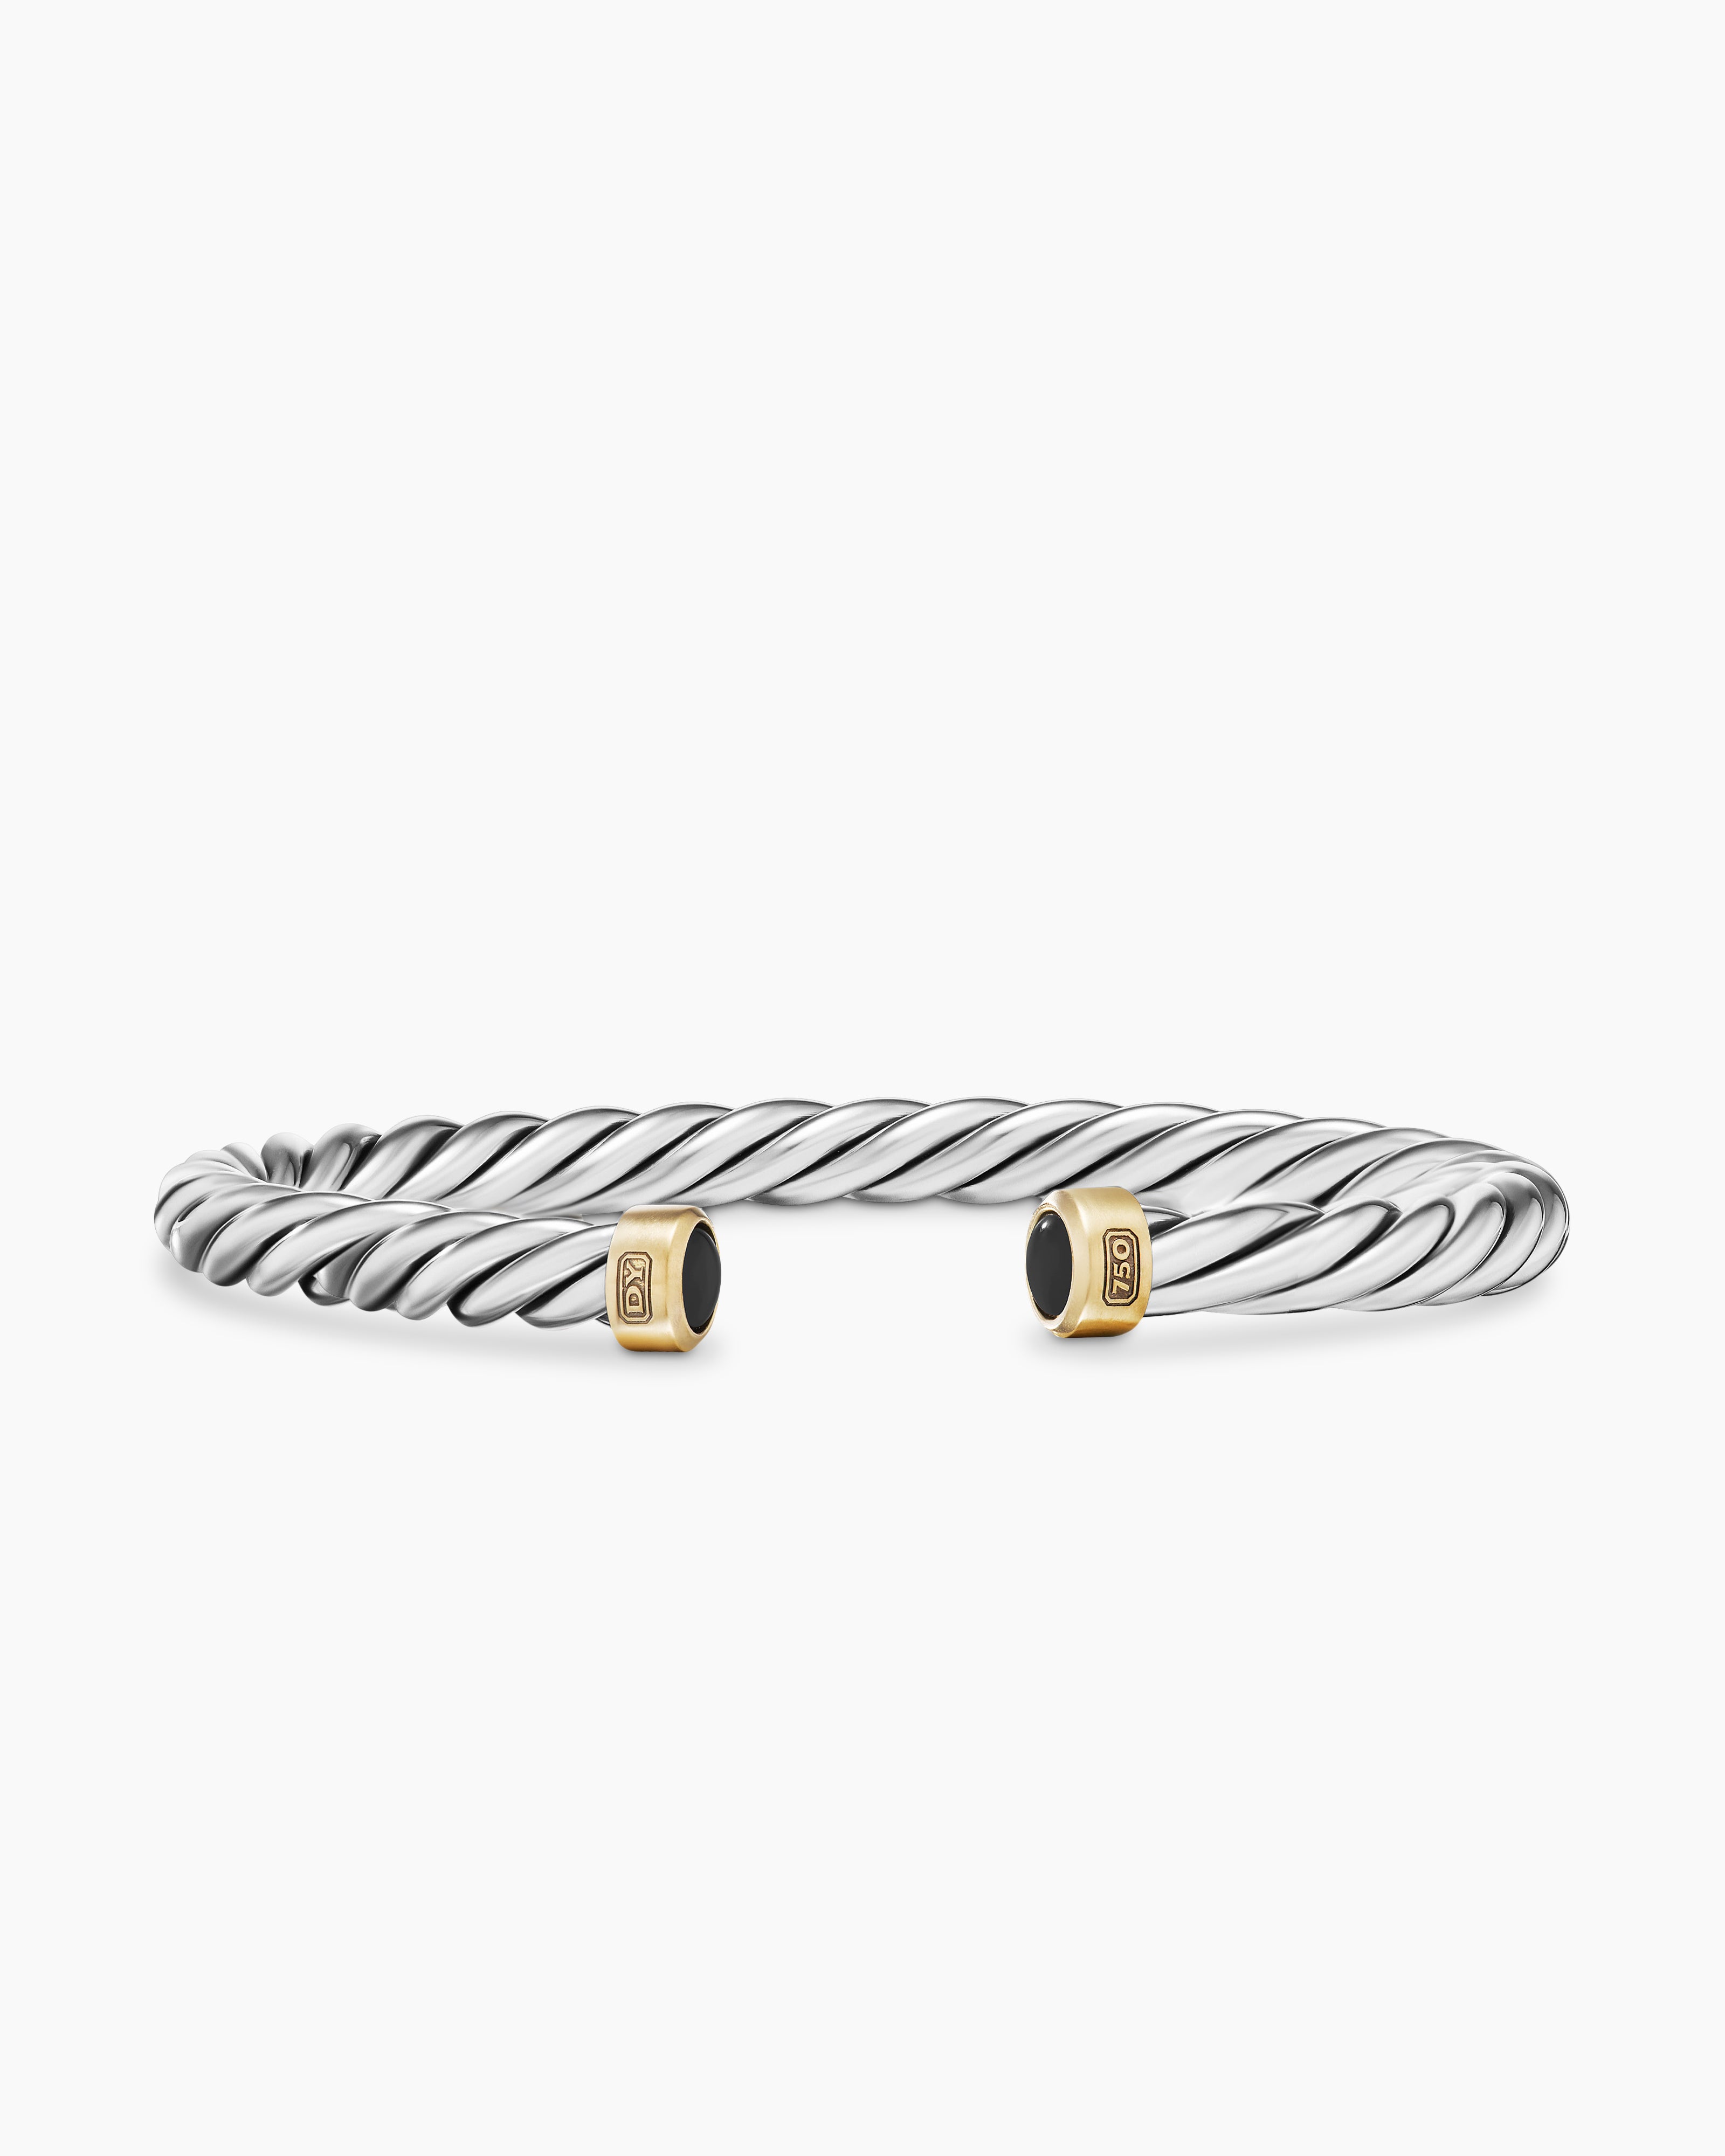 David Yurman Men's Cable Classic Cuff Bracelet